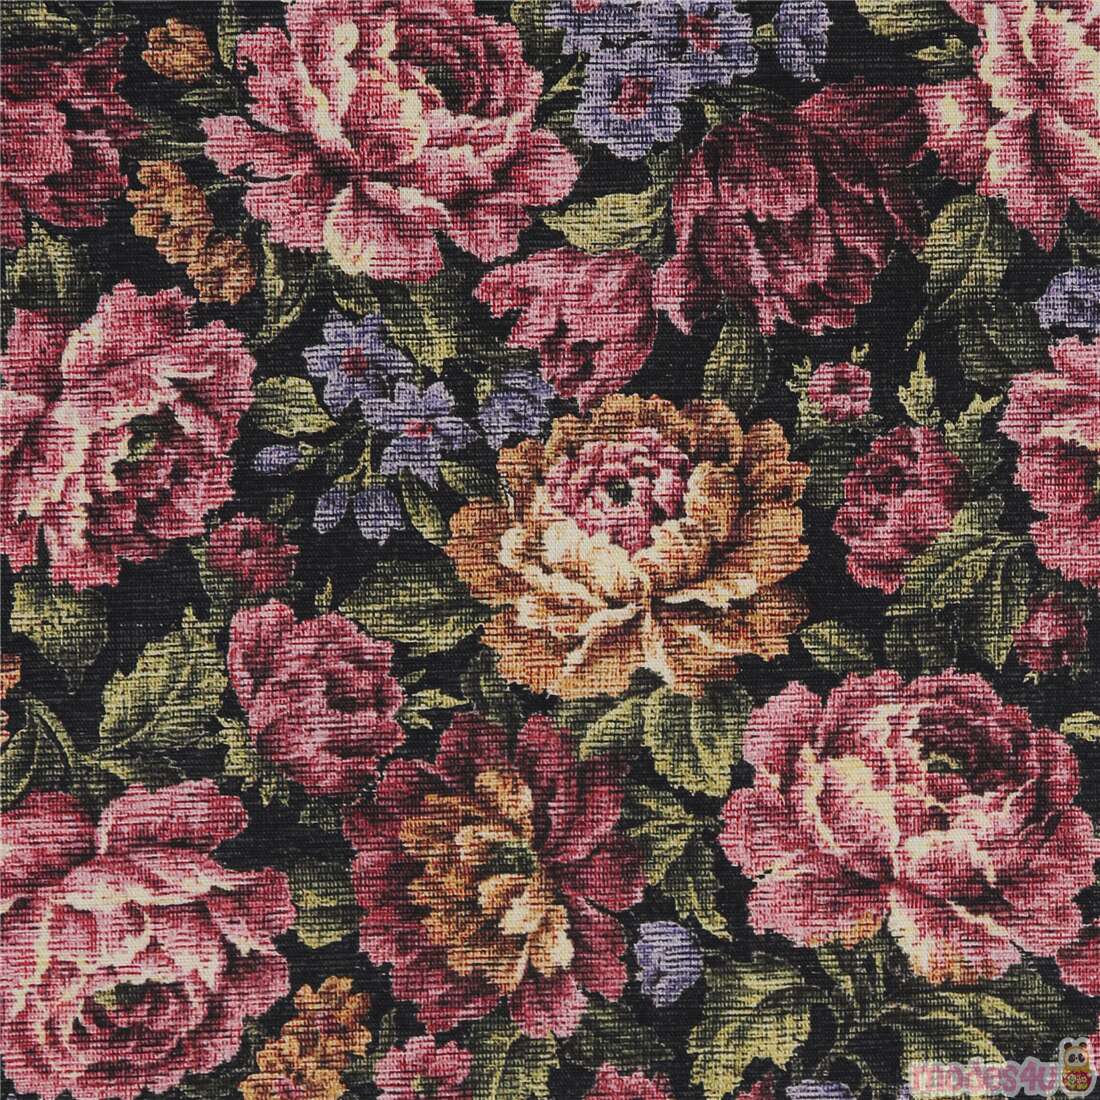 Vintage Floral Tapestry Close-up Pattern Stock Photo - Image of floral,  vintage: 122421486